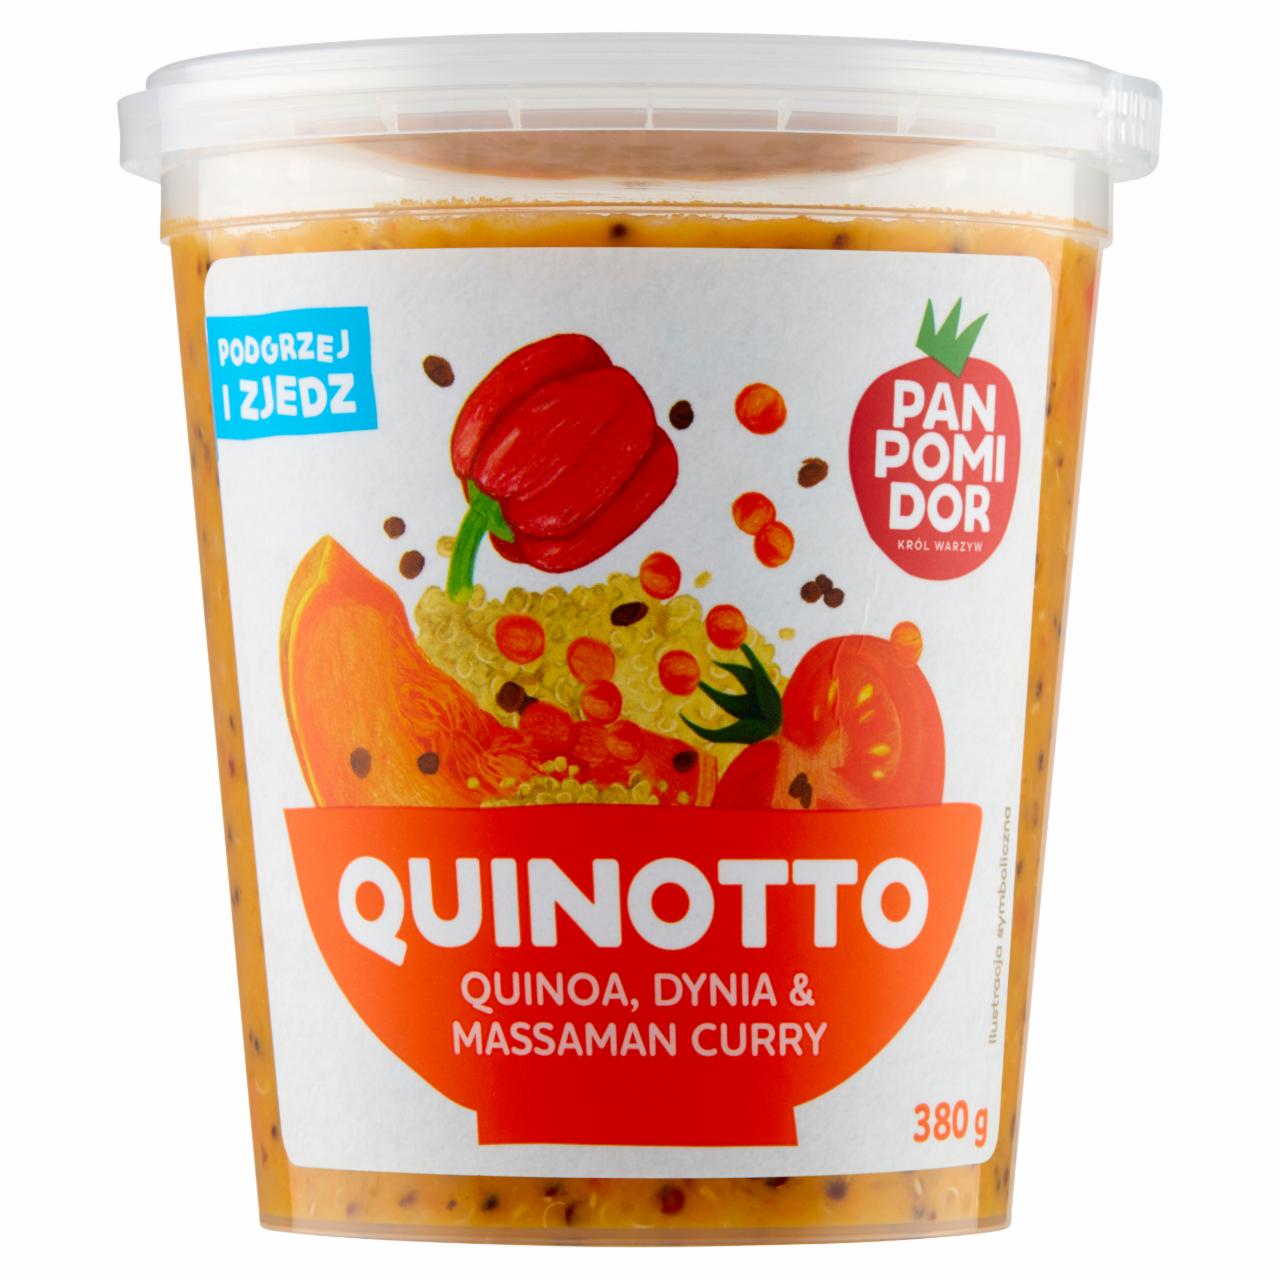 Fotografie - Quinotto quinoa, dynia & massaman curry Pan Pomidor